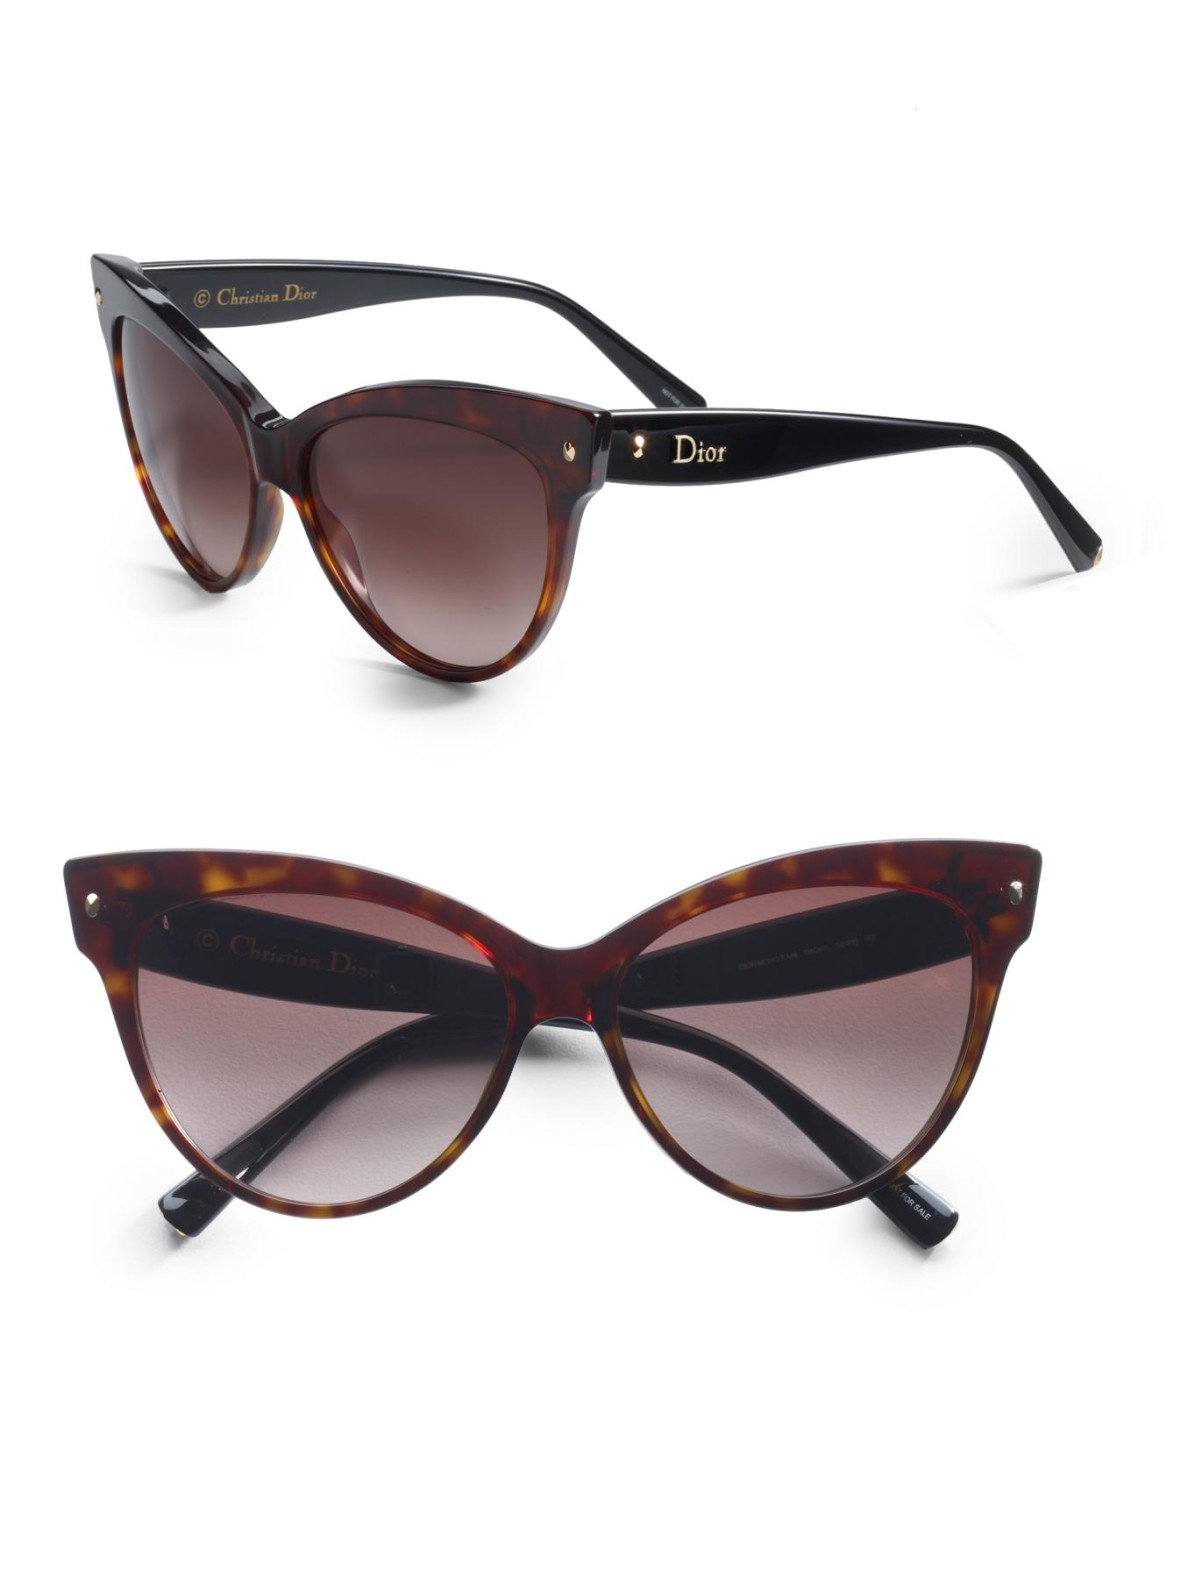 cateye sunglasses online